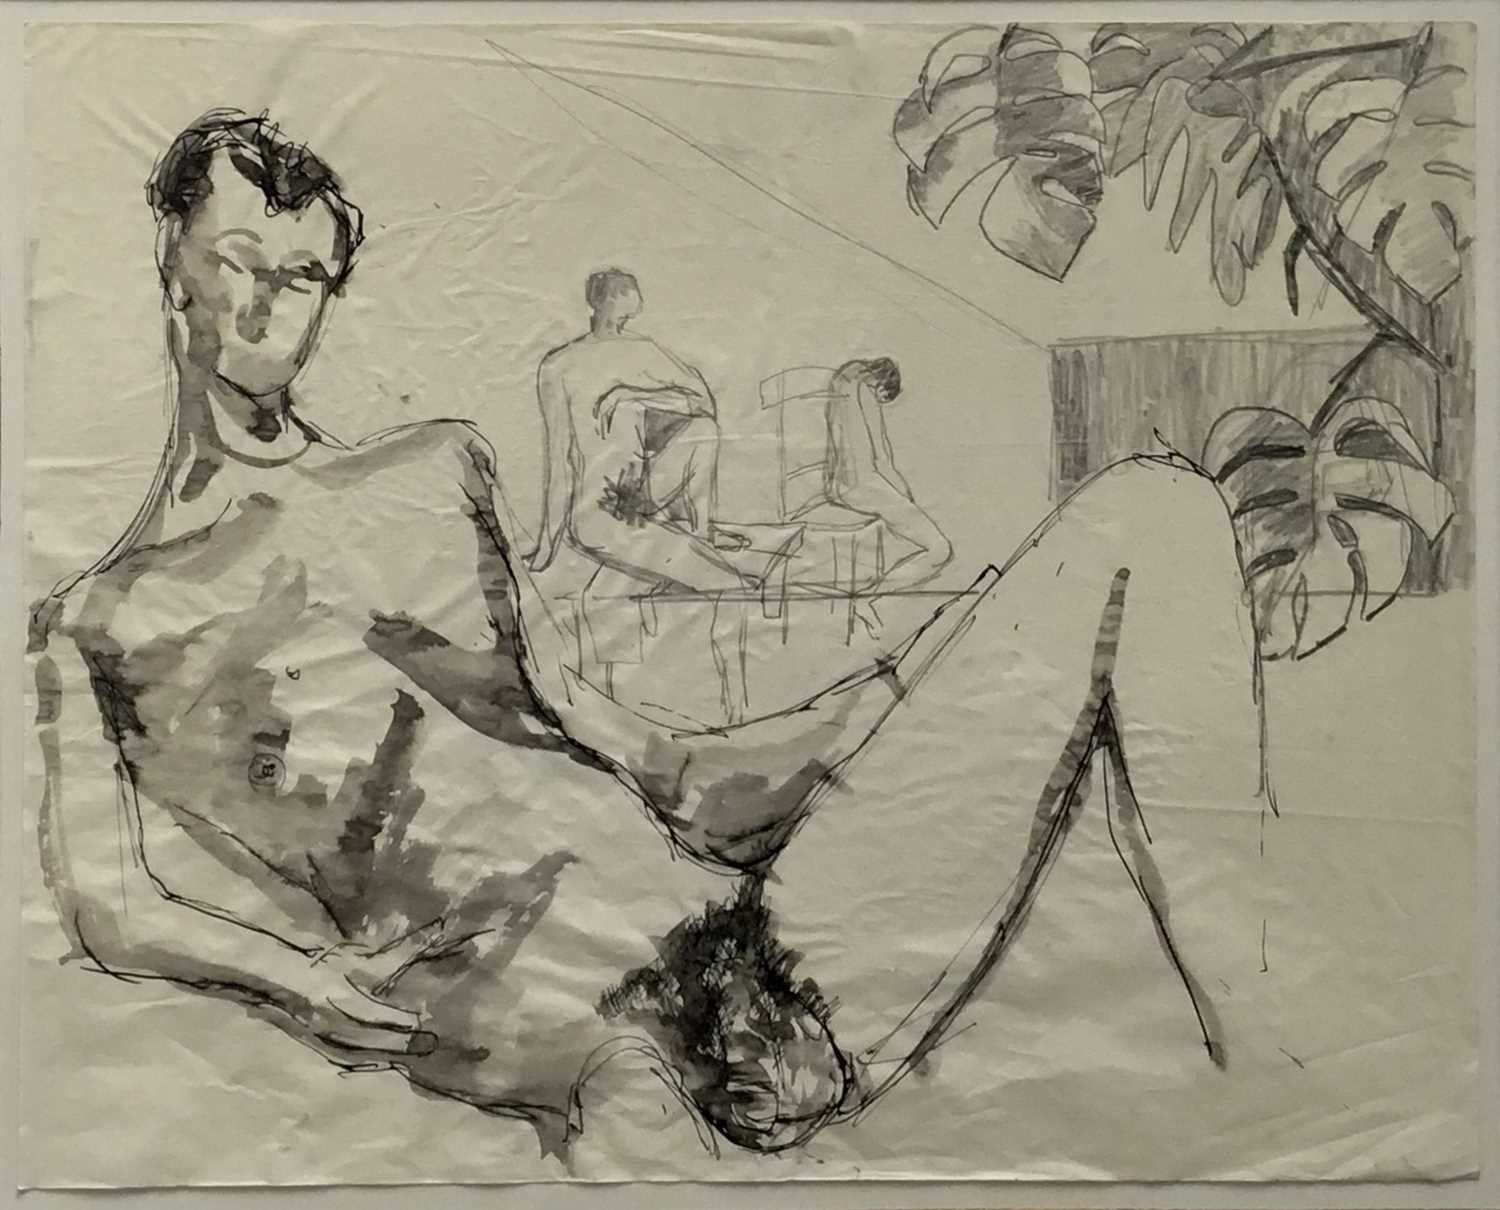 Modern British School pen wash and pencil - male nudes, 40cm x 50cm, in glazed frame